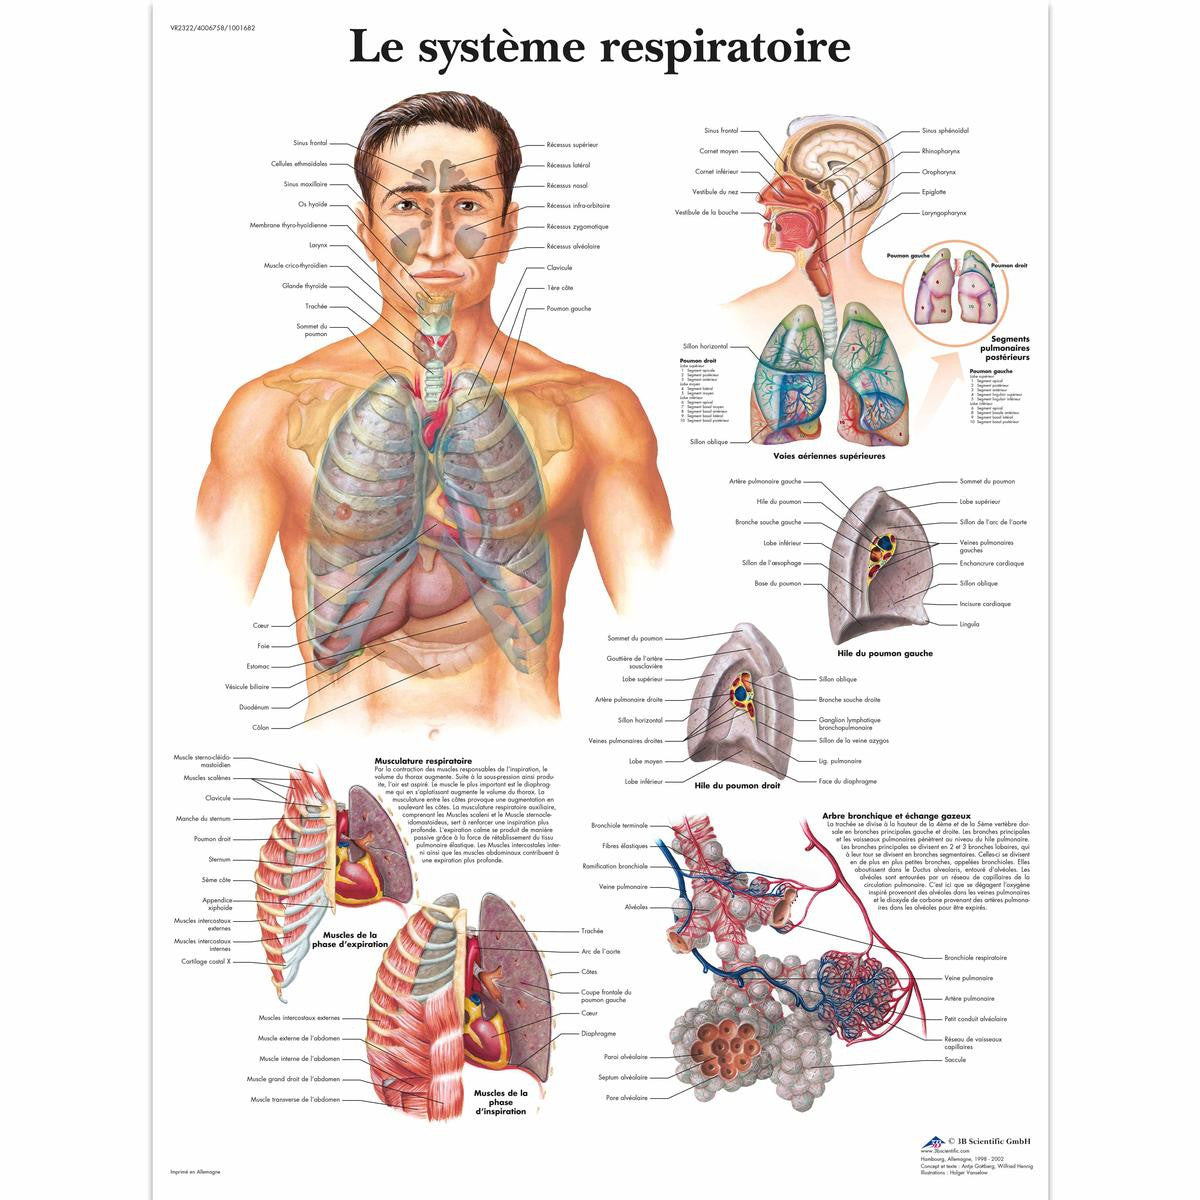 Le systeme respiratoire chart